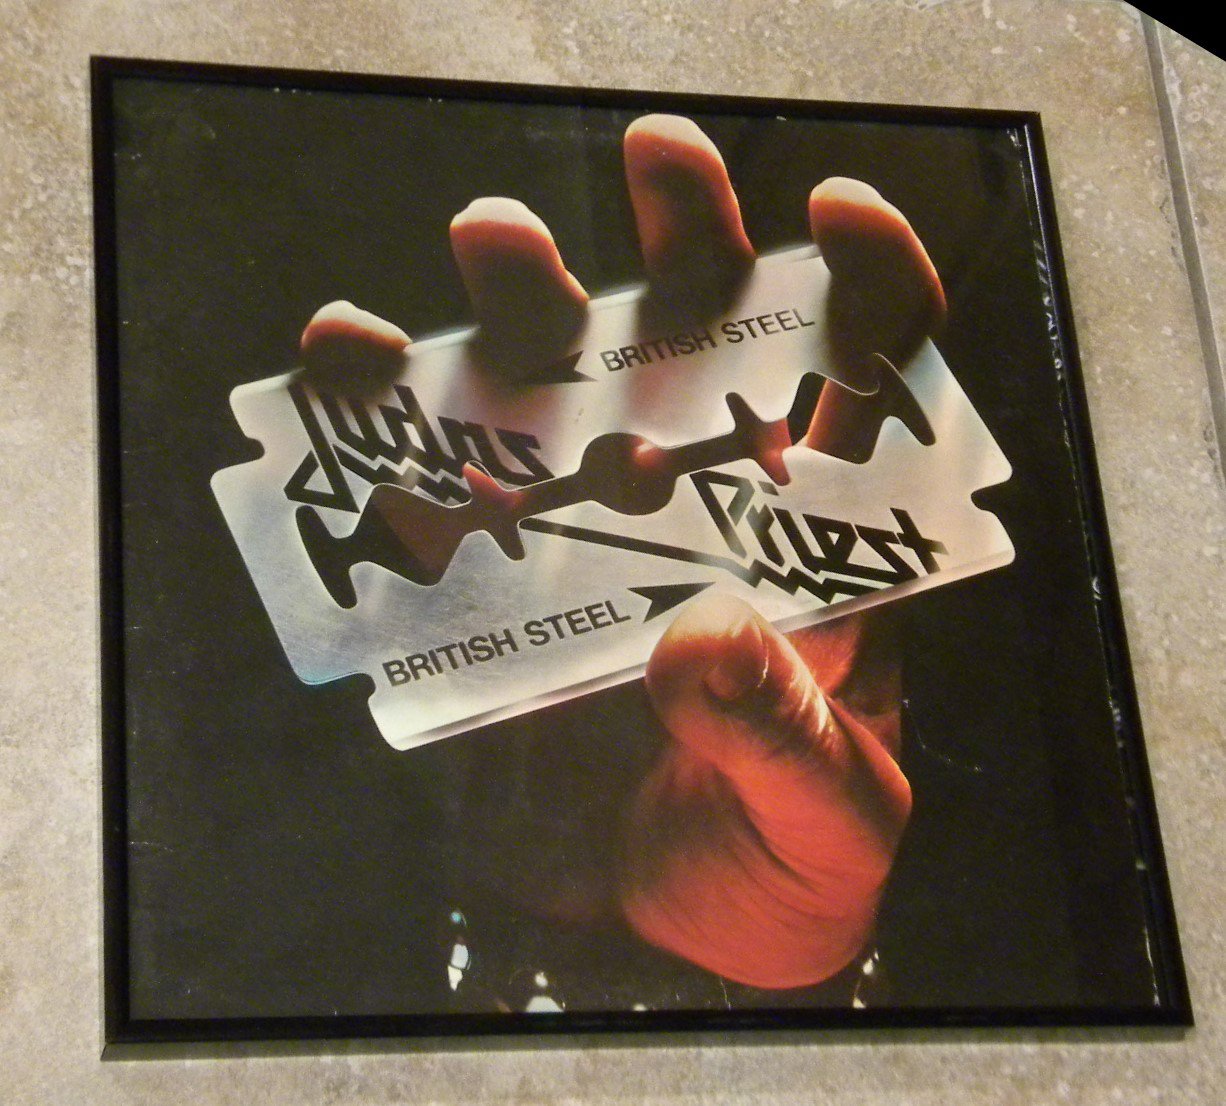 Invincible shield judas priest альбомы. Judas Priest "British Steel". Judas Priest British Steel обложка. Judas Priest British Steel 1980 обложка. Vinyl Judas Priest British Steel.